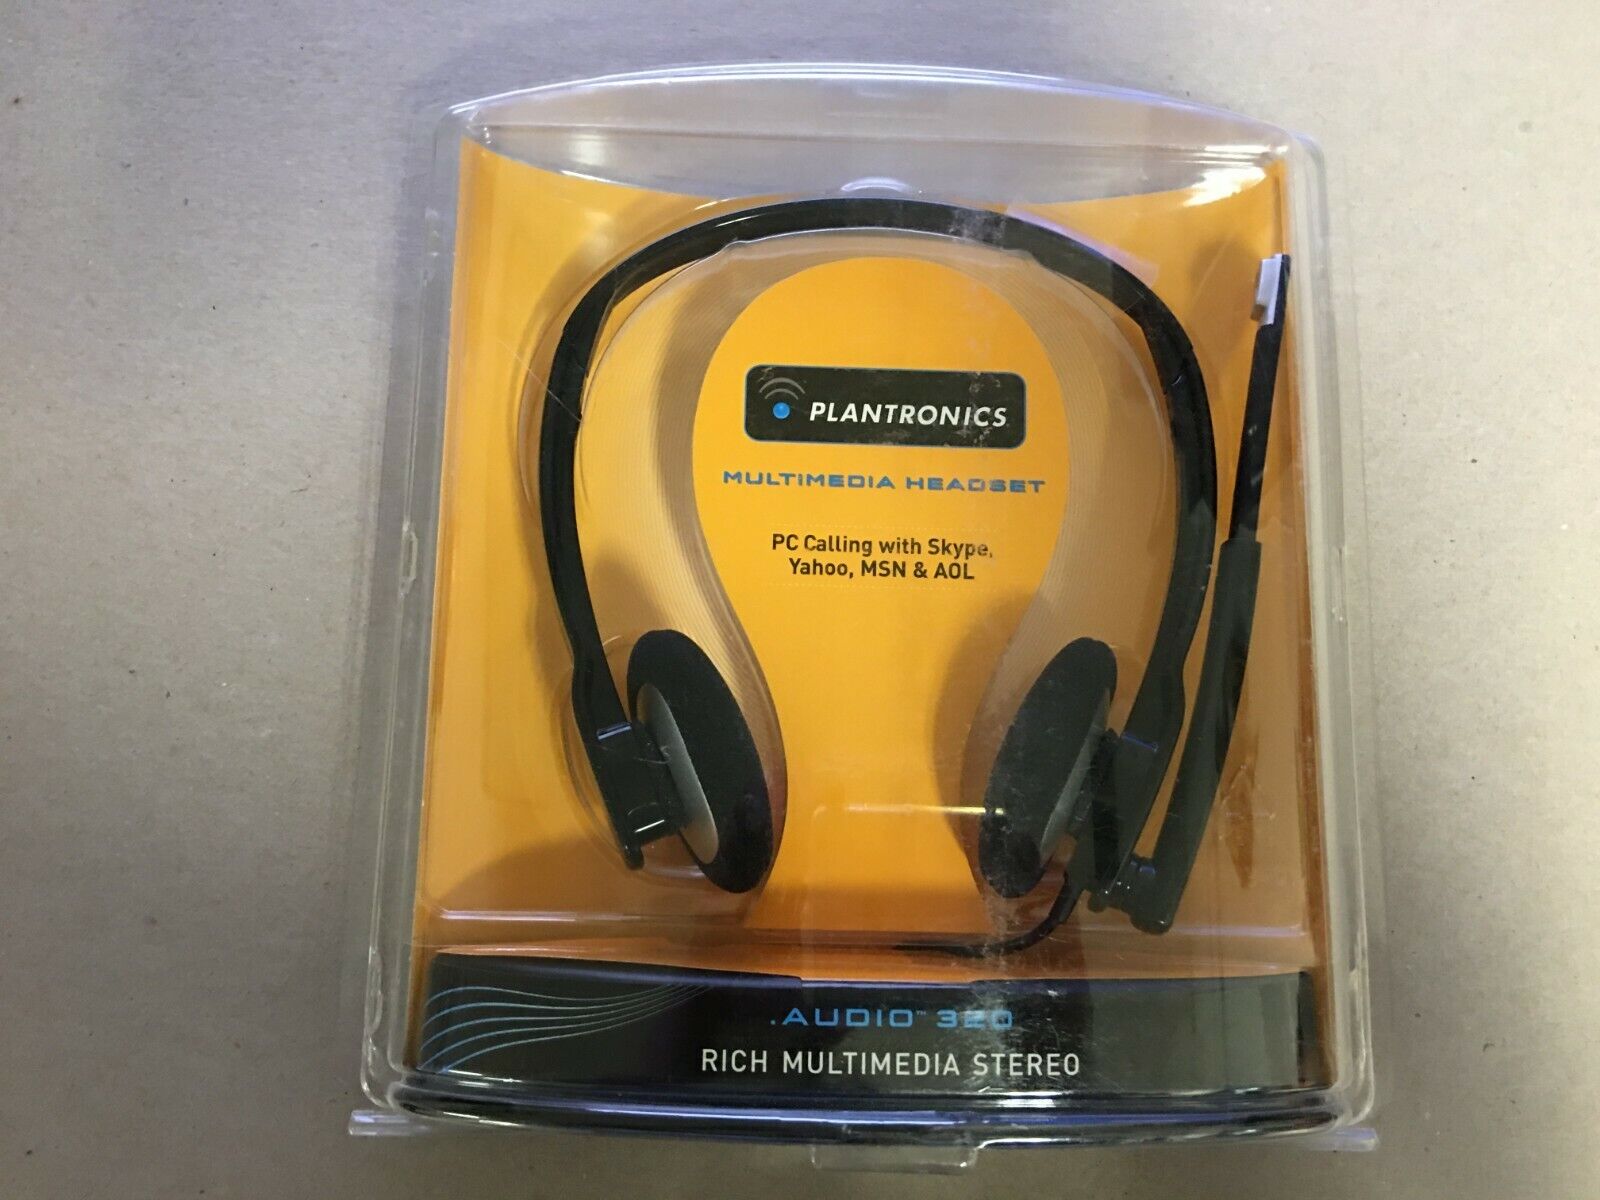 Plantronics Audio 320 Pc Calling Rich Multimedia Stereo Headset New